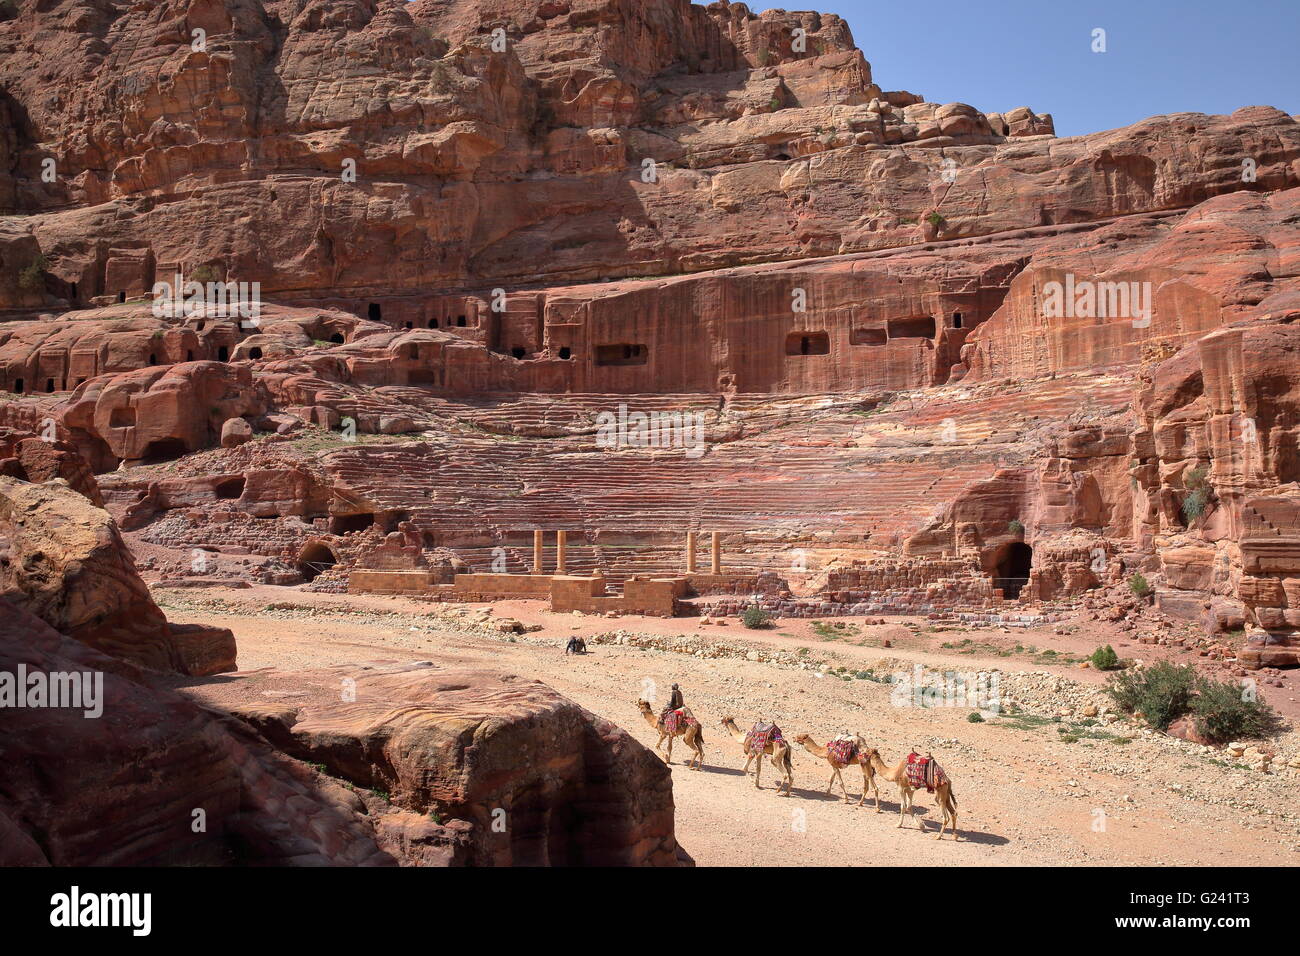 Camels along The Roman Theatre in Petra, Jordan Stock Photo